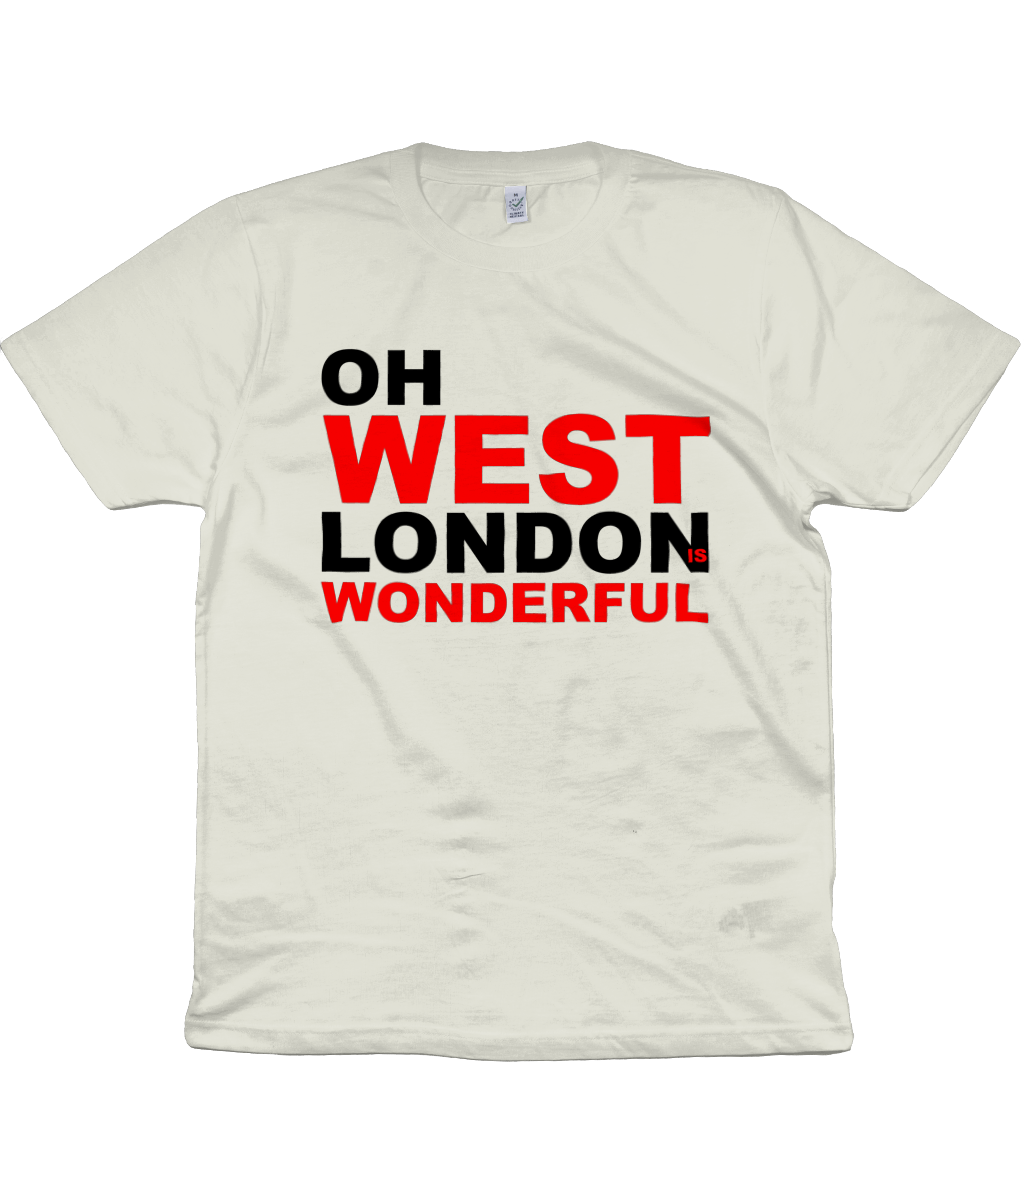 Oh West London is Wonderful Unisex T-Shirt